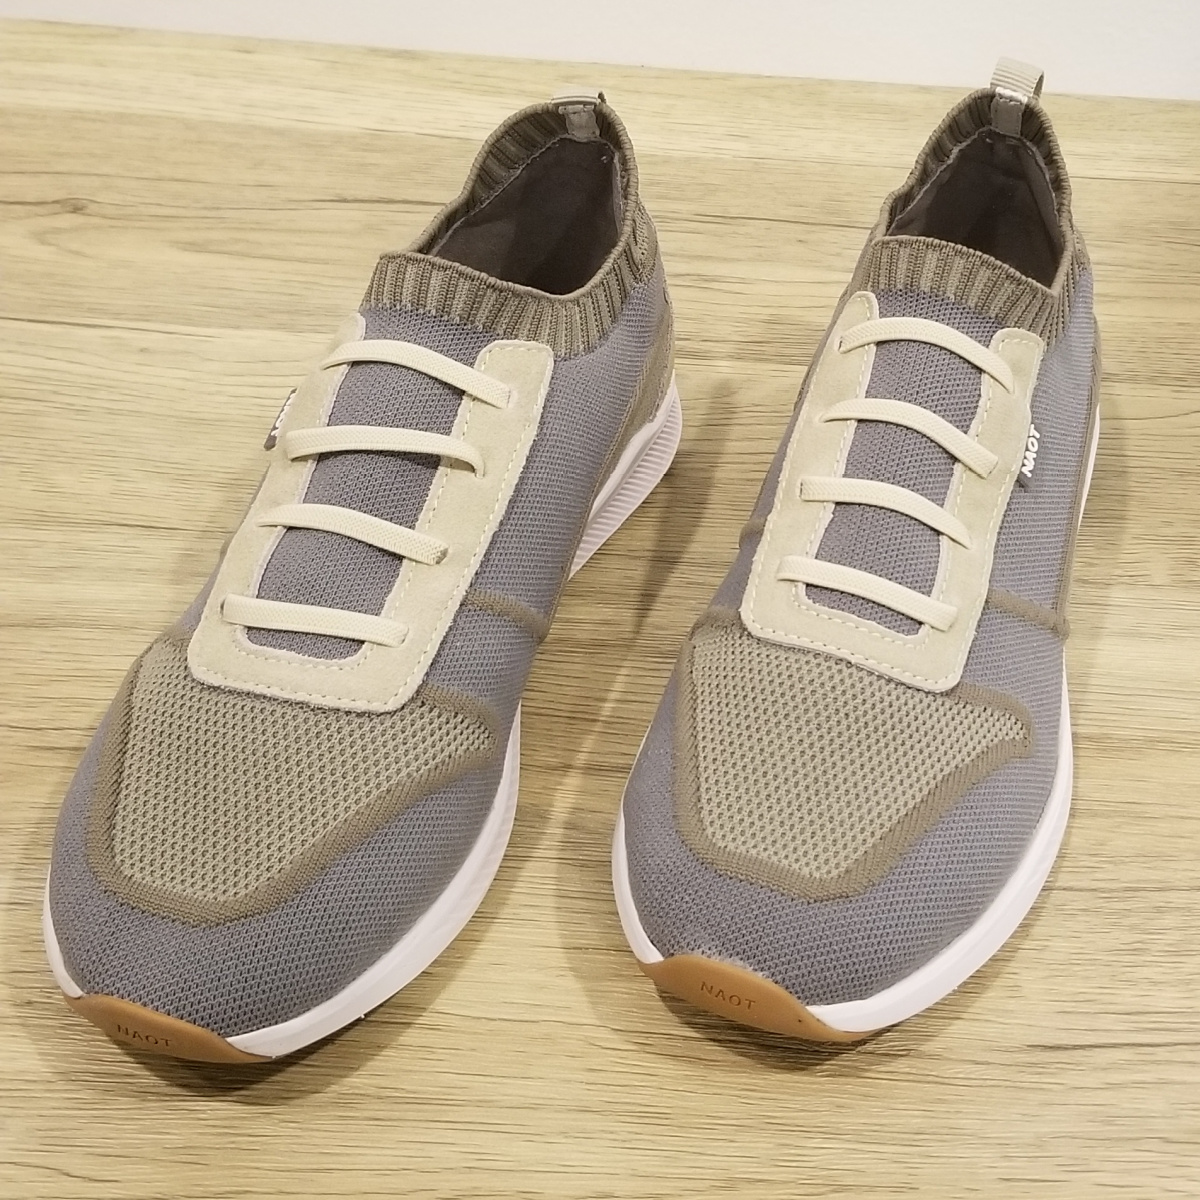 Naot adonis sneakers in grey